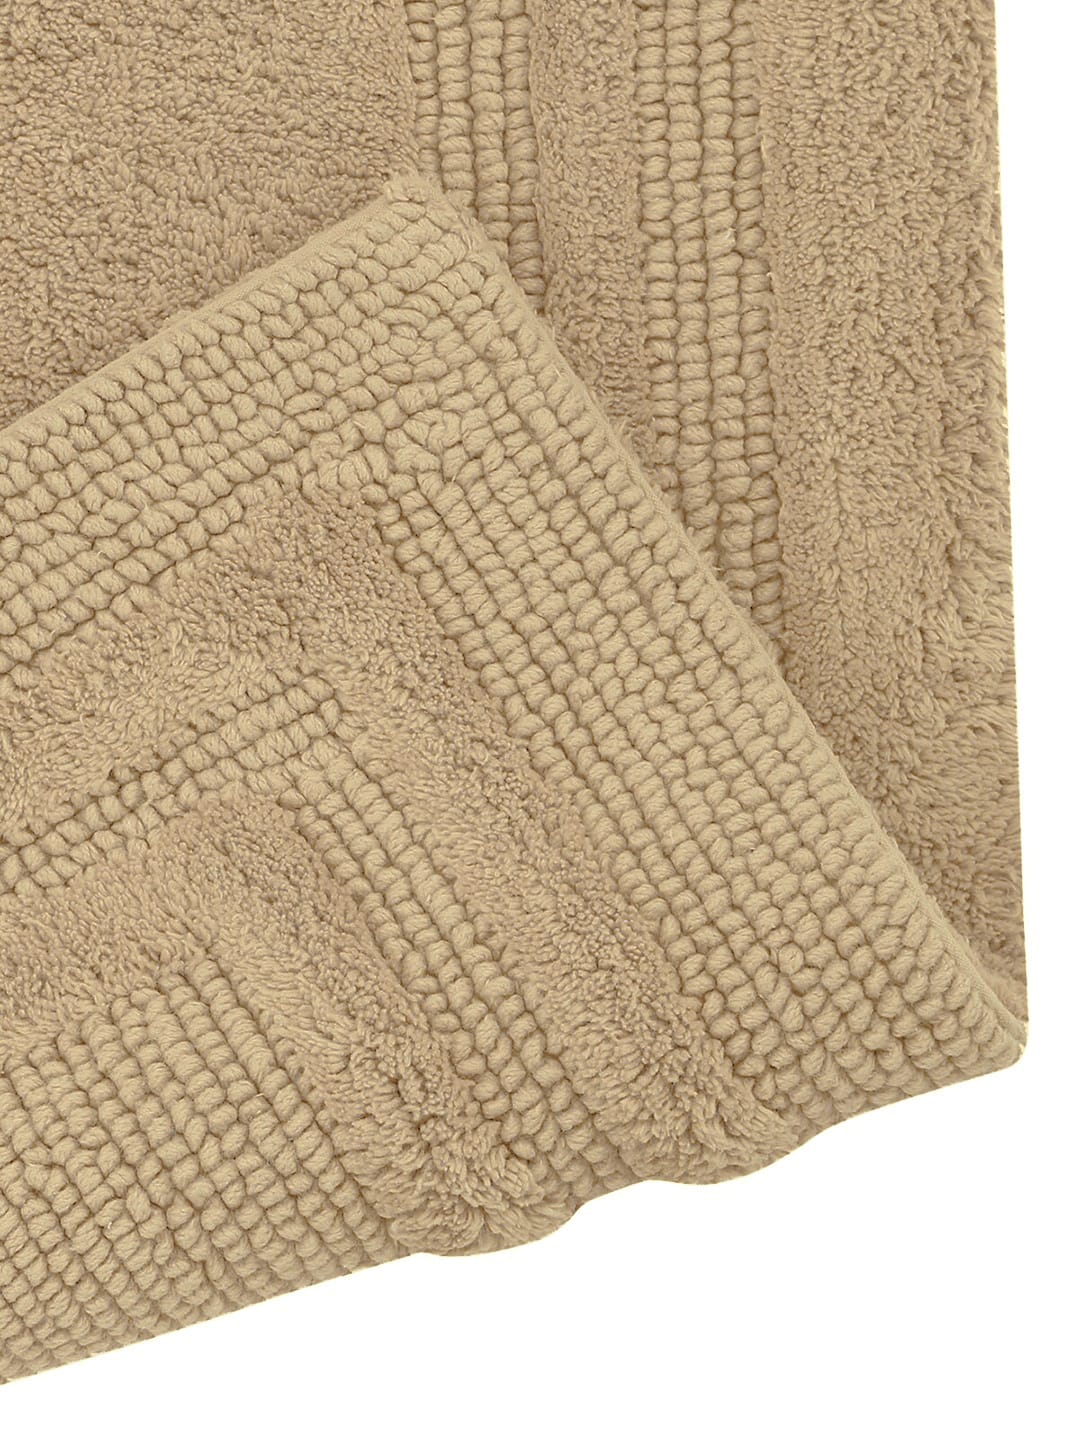 Non Slip Luxury Reversible Cotton Bathmat In Camel Brown Online At Best Prices